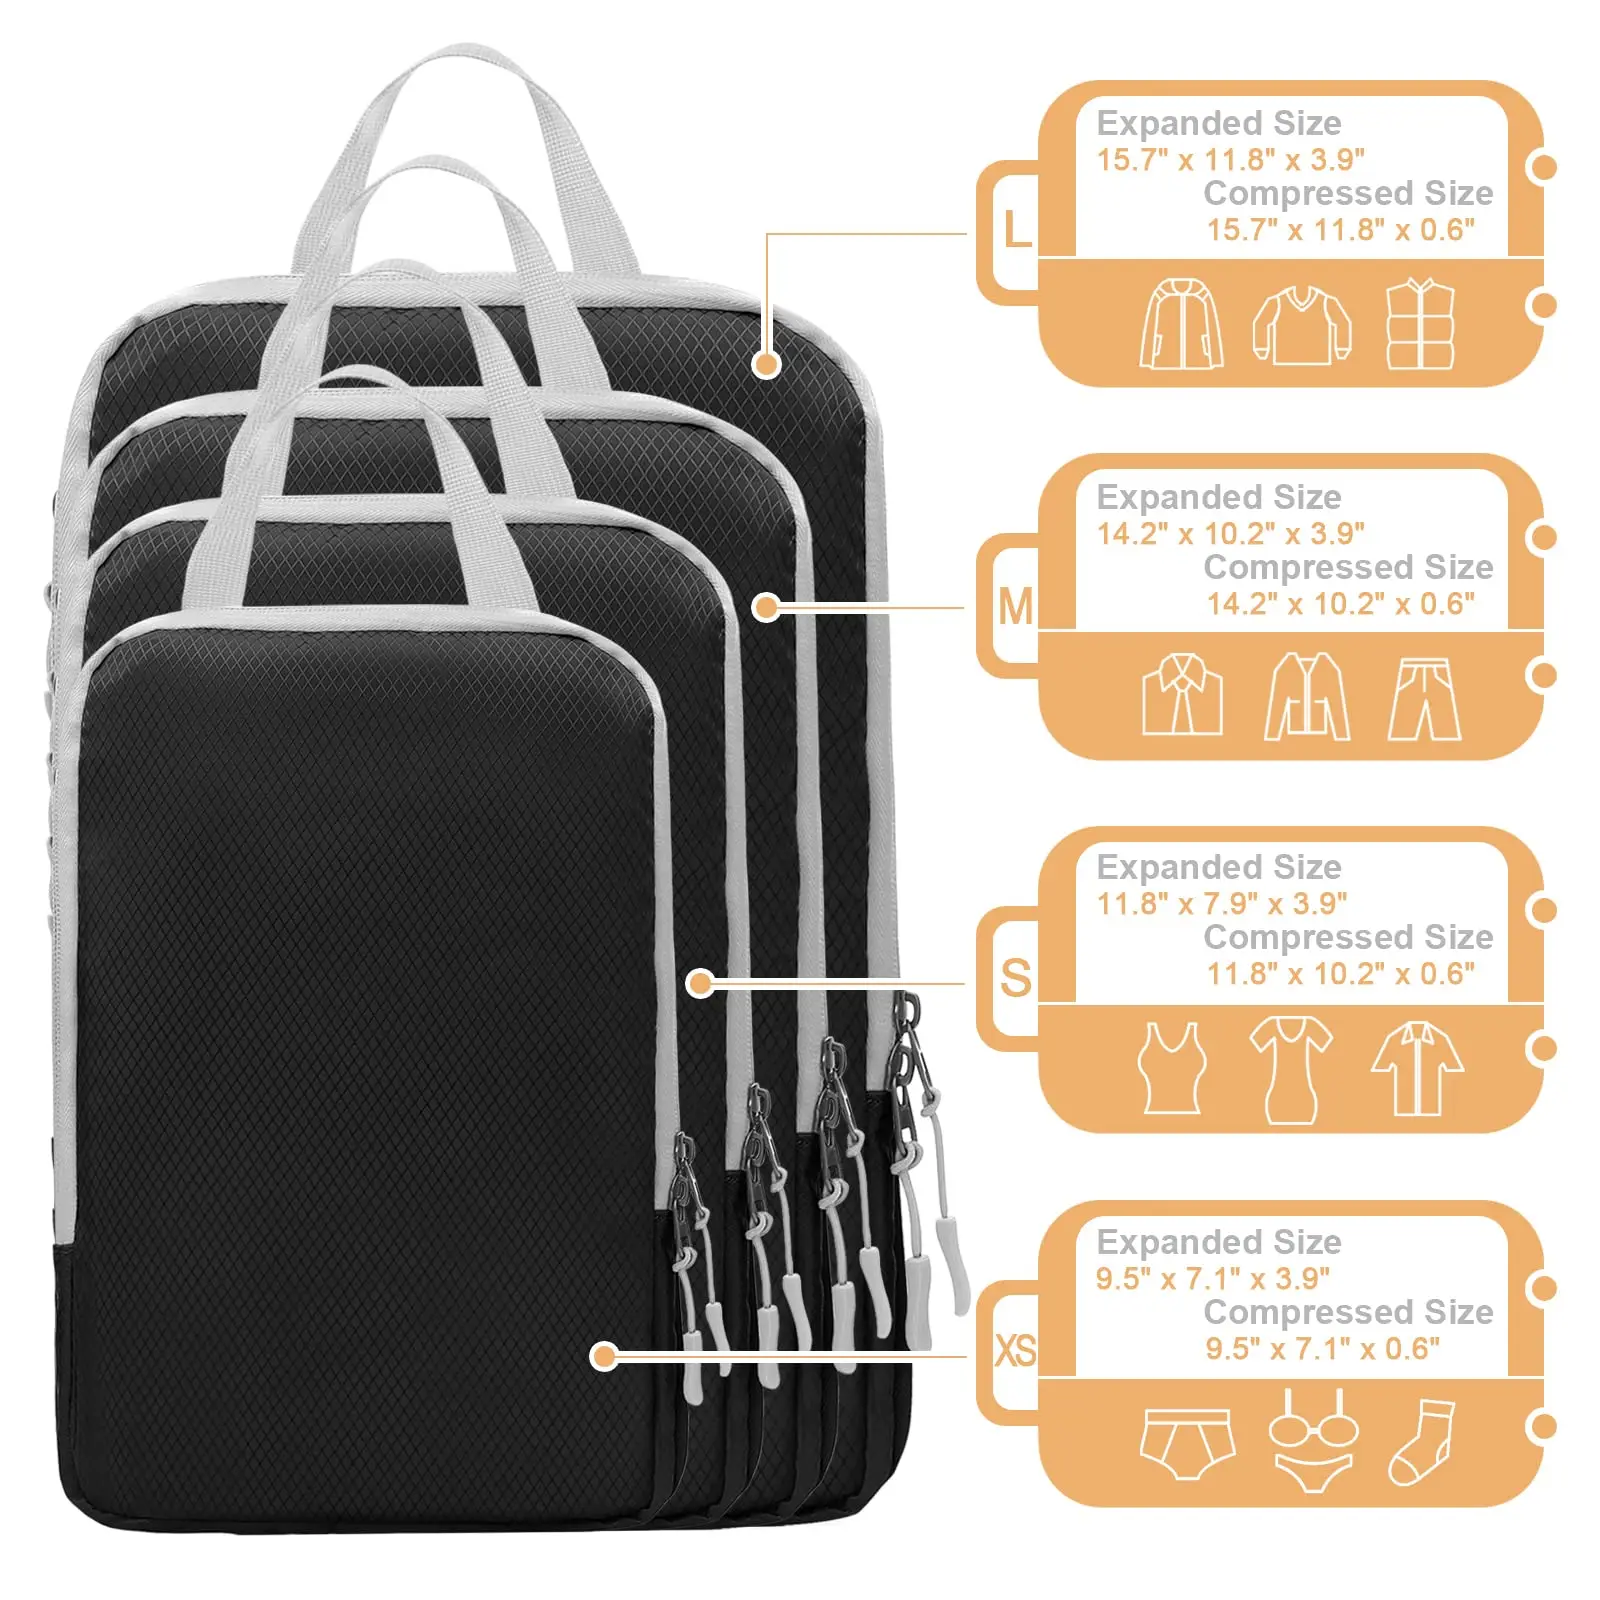 https://ae01.alicdn.com/kf/Se6aa1681de7f42899b6ae0ecb3df4282U/4PCS-Travel-Compressible-Packing-Cubes-Foldable-Waterproof-Storage-Bag-Suitcase-Nylon-Portable-With-Handbag-Luggage-Organizer.jpeg